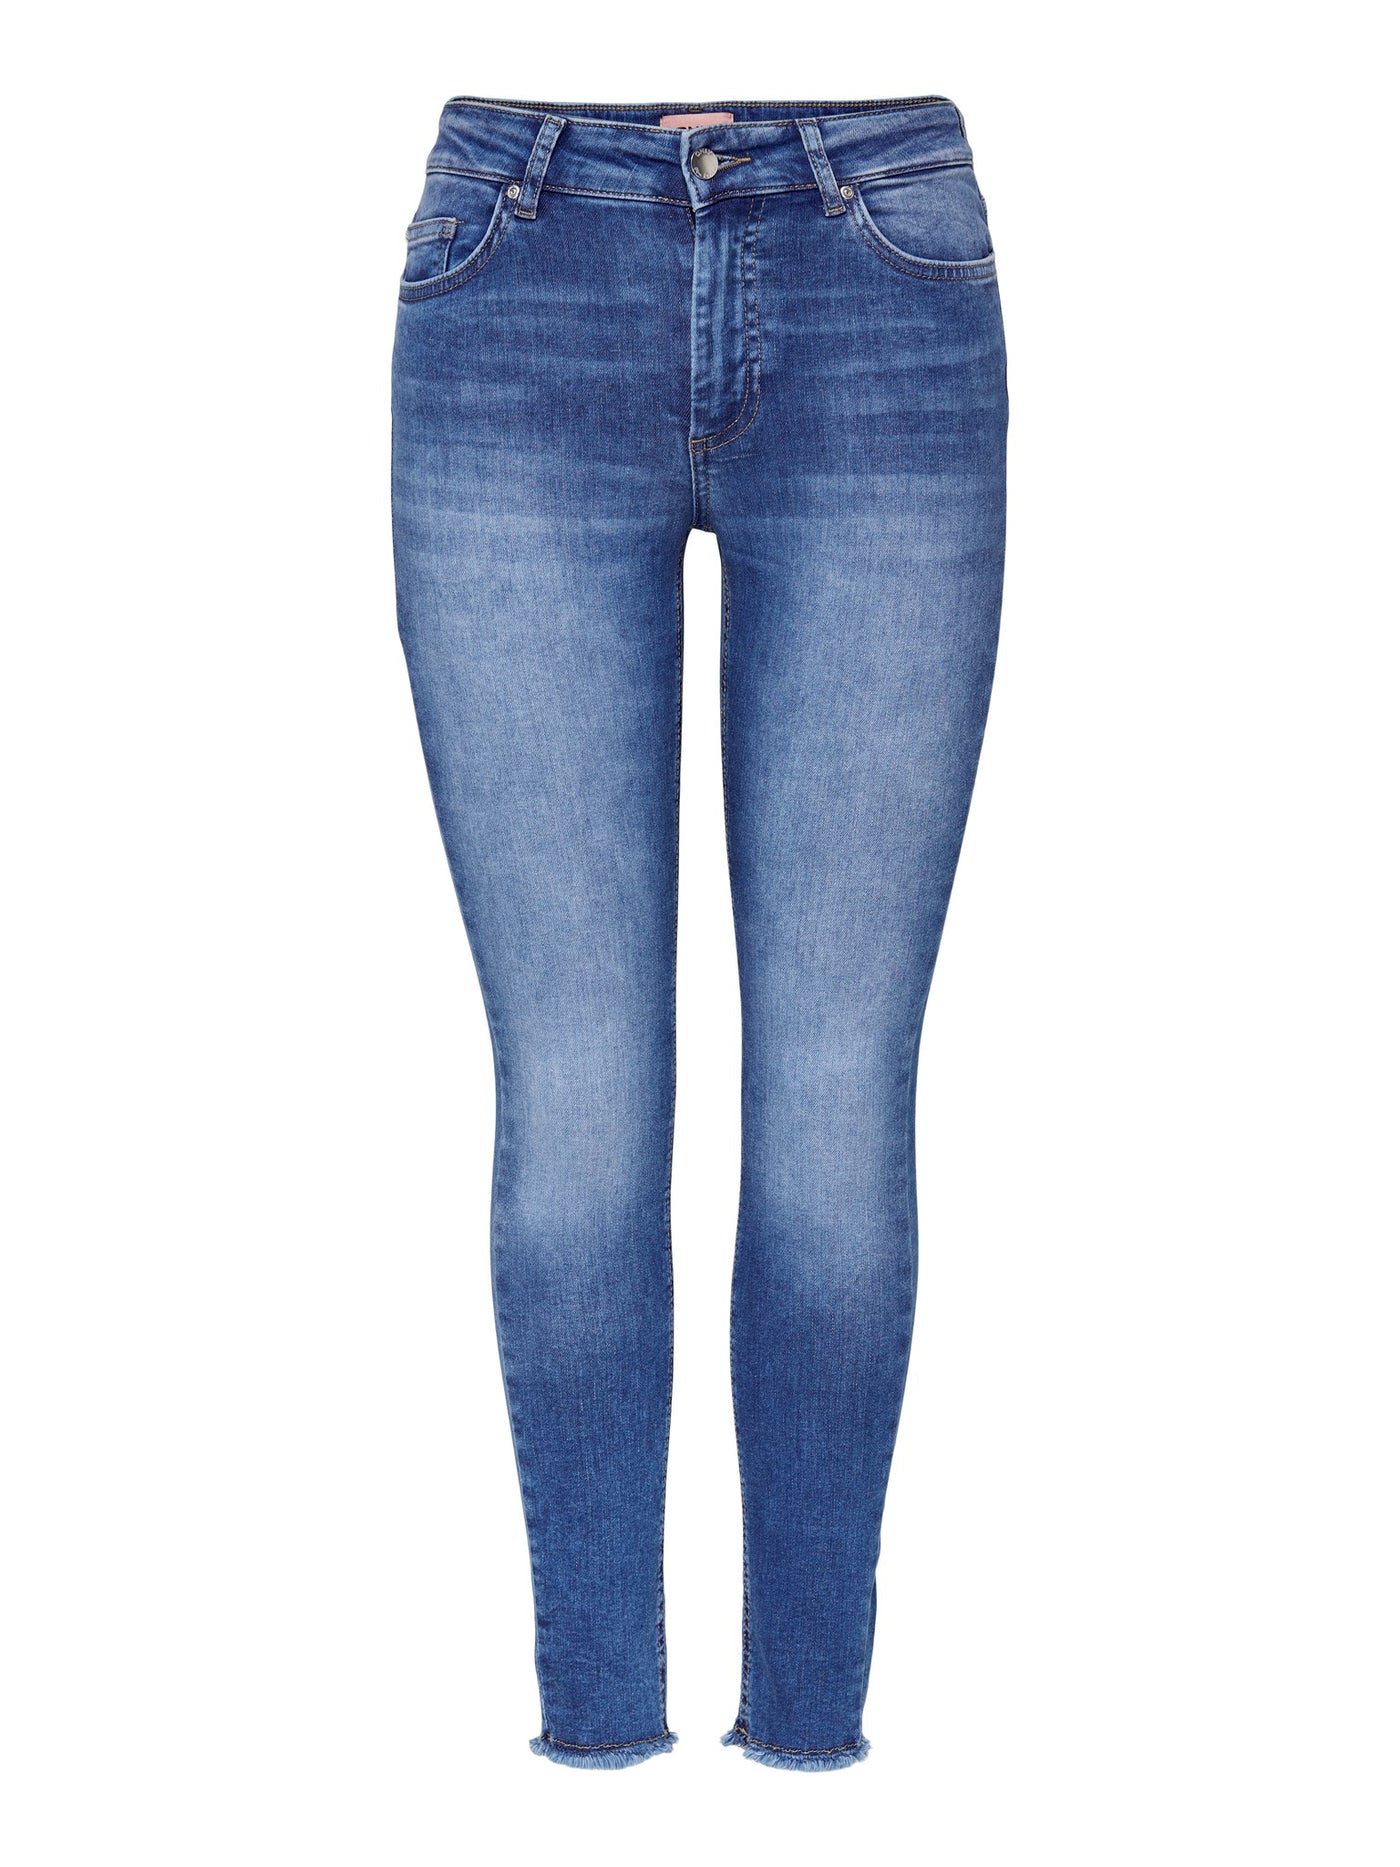 Blush Midsk Jeans - Medium Blue - ONLY - Blue 3